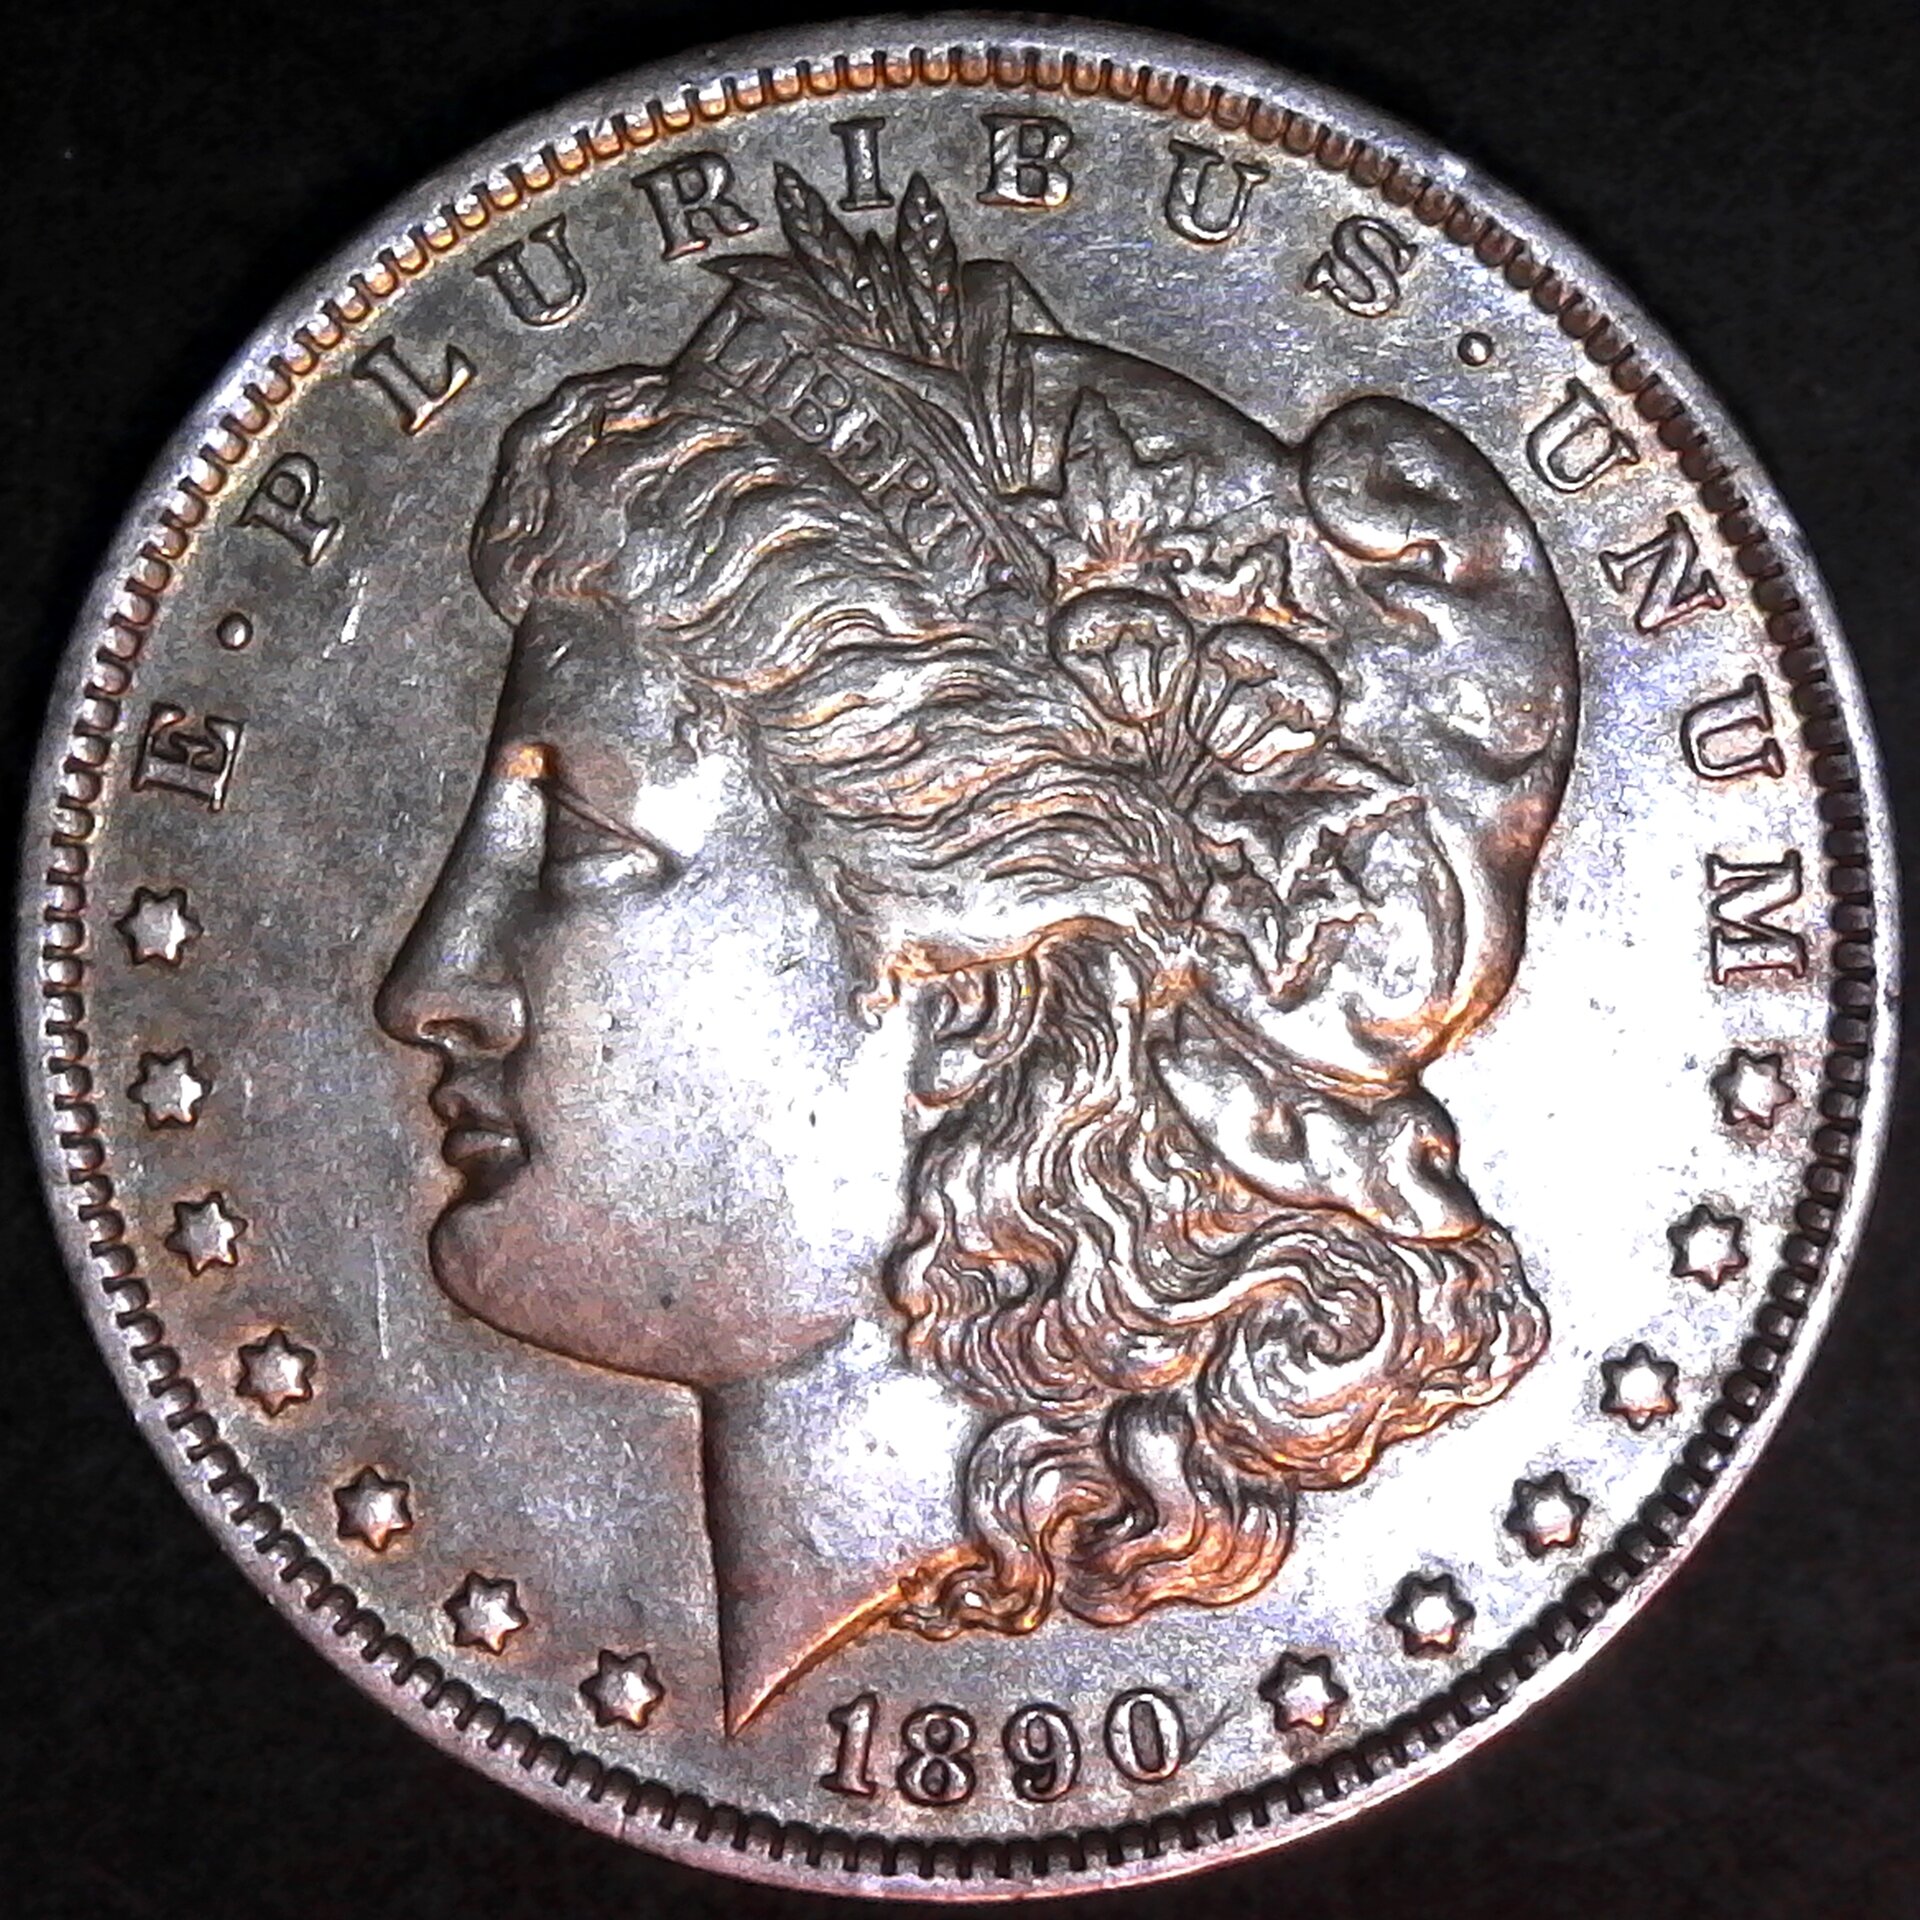 United States One Dollar 1890 O obverse.jpg